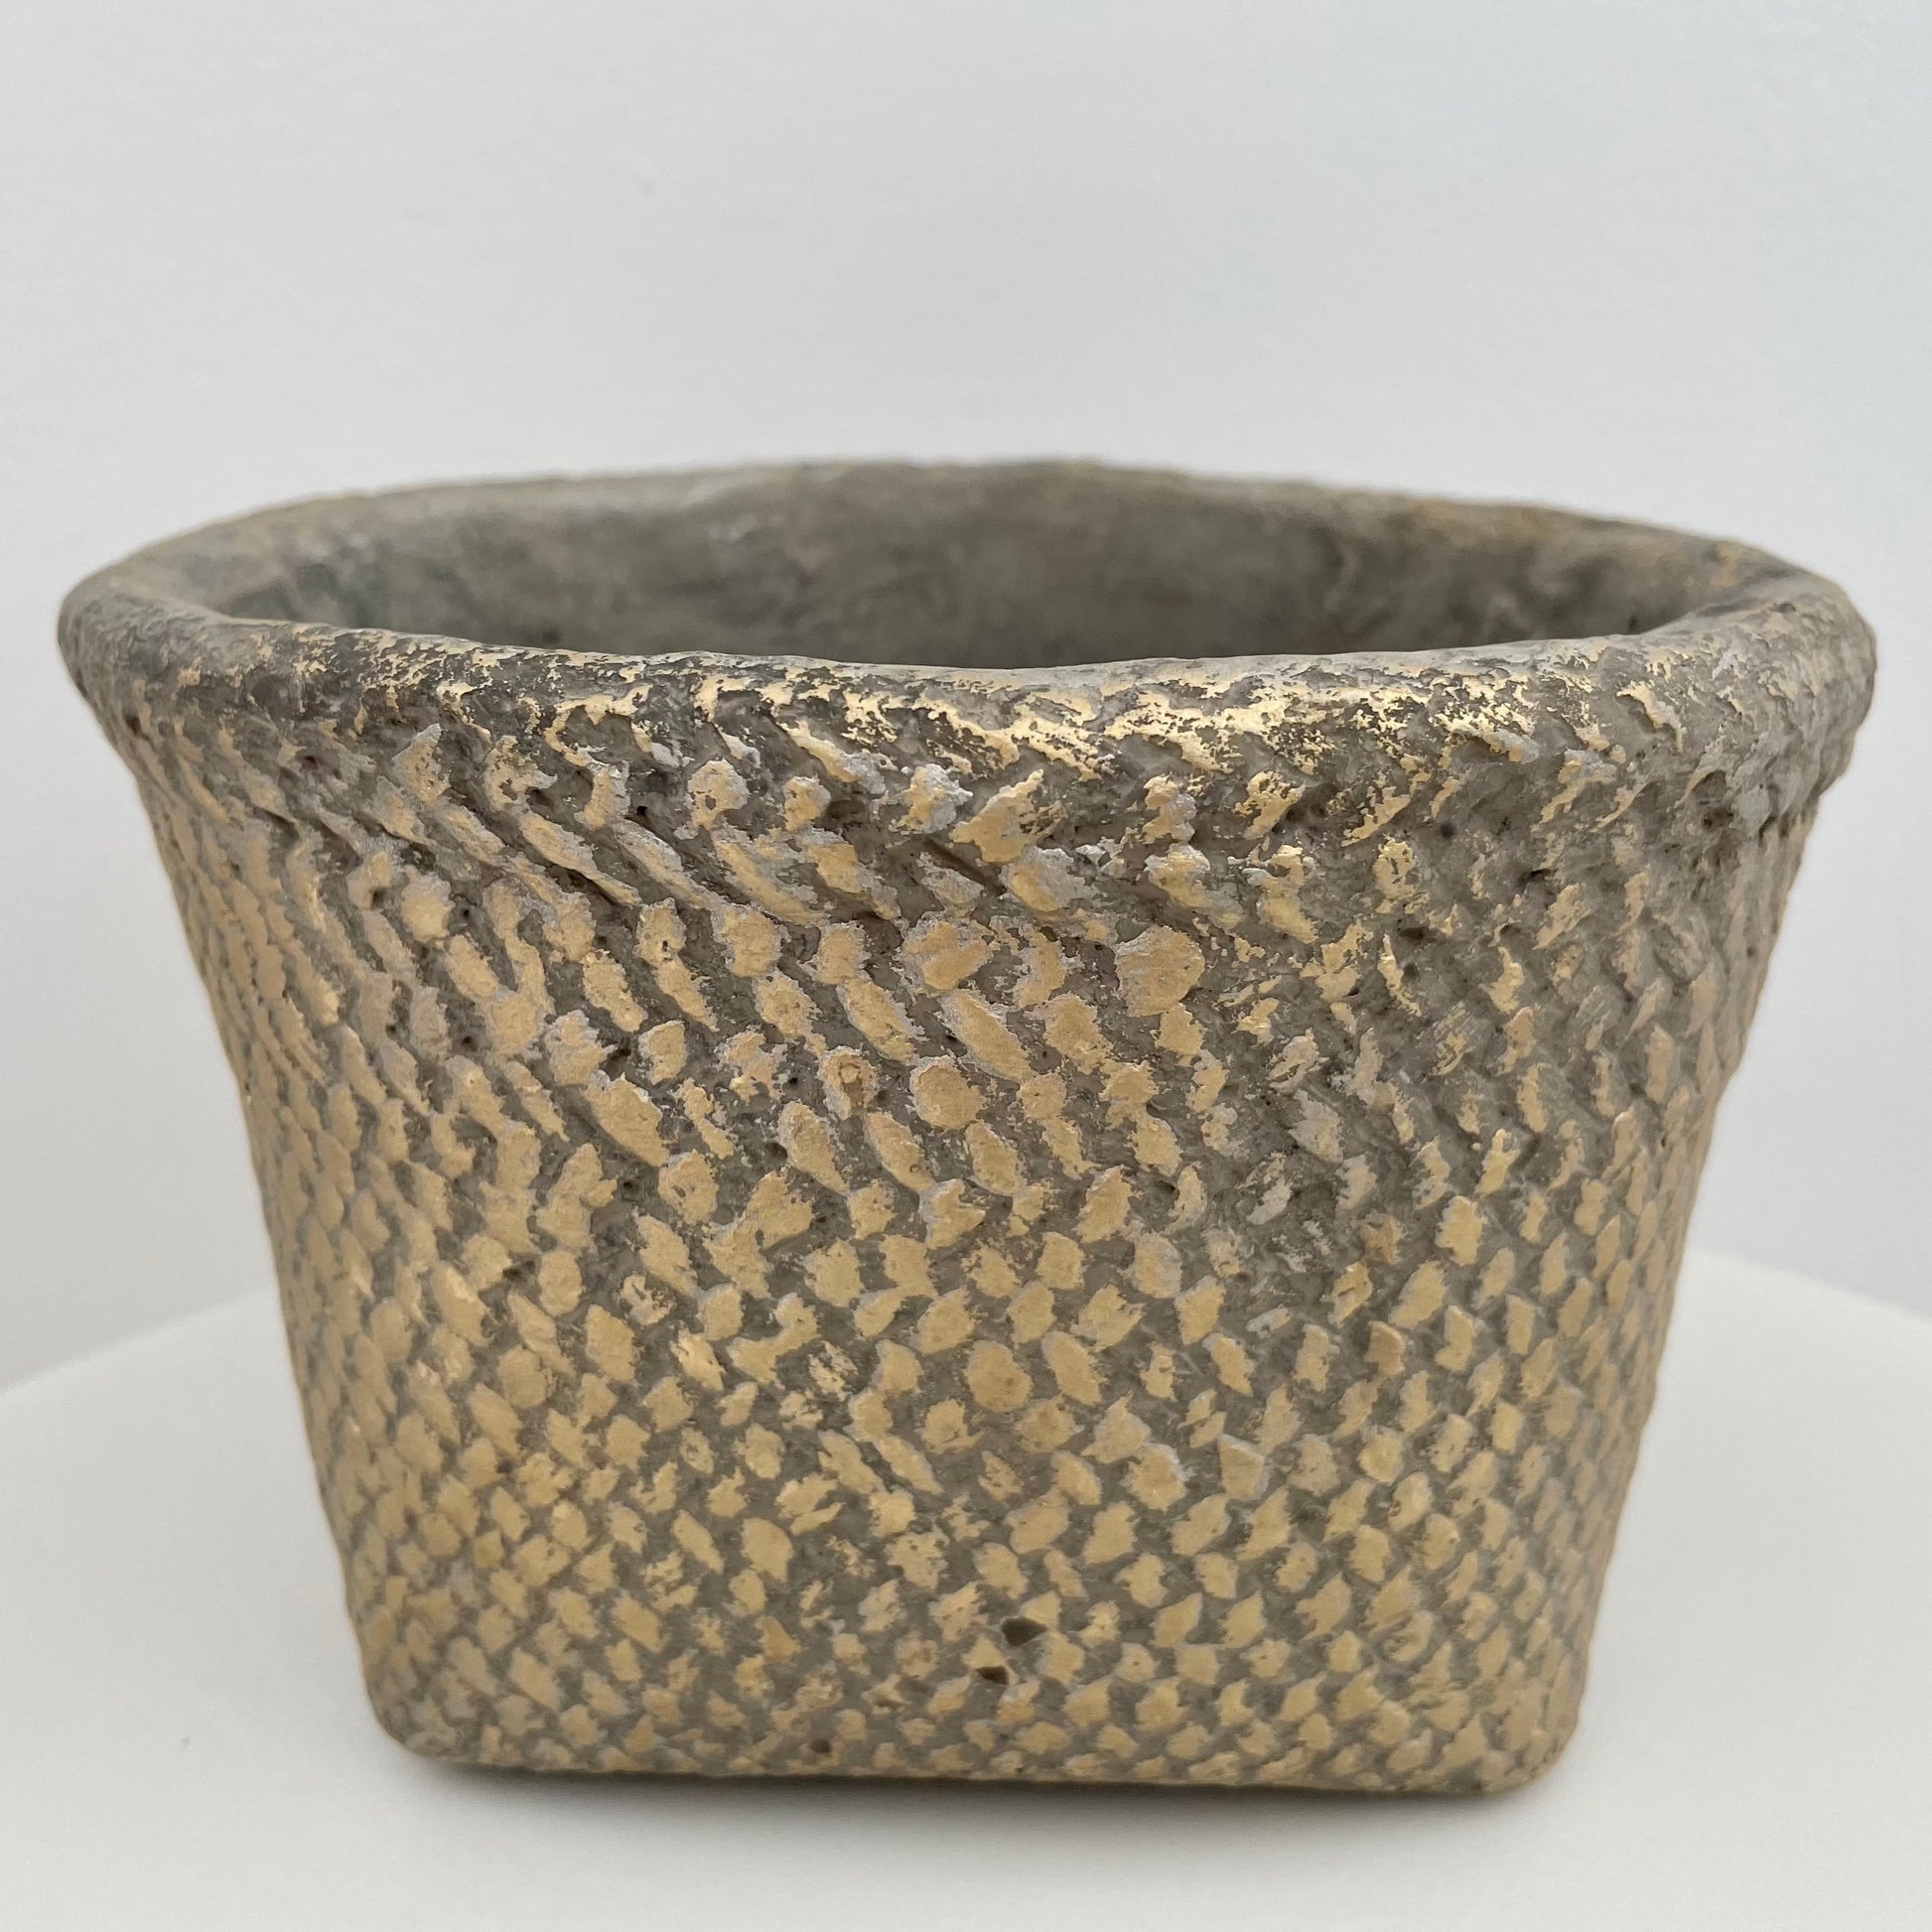 gold metallic finished faux basket cement garden pot planter